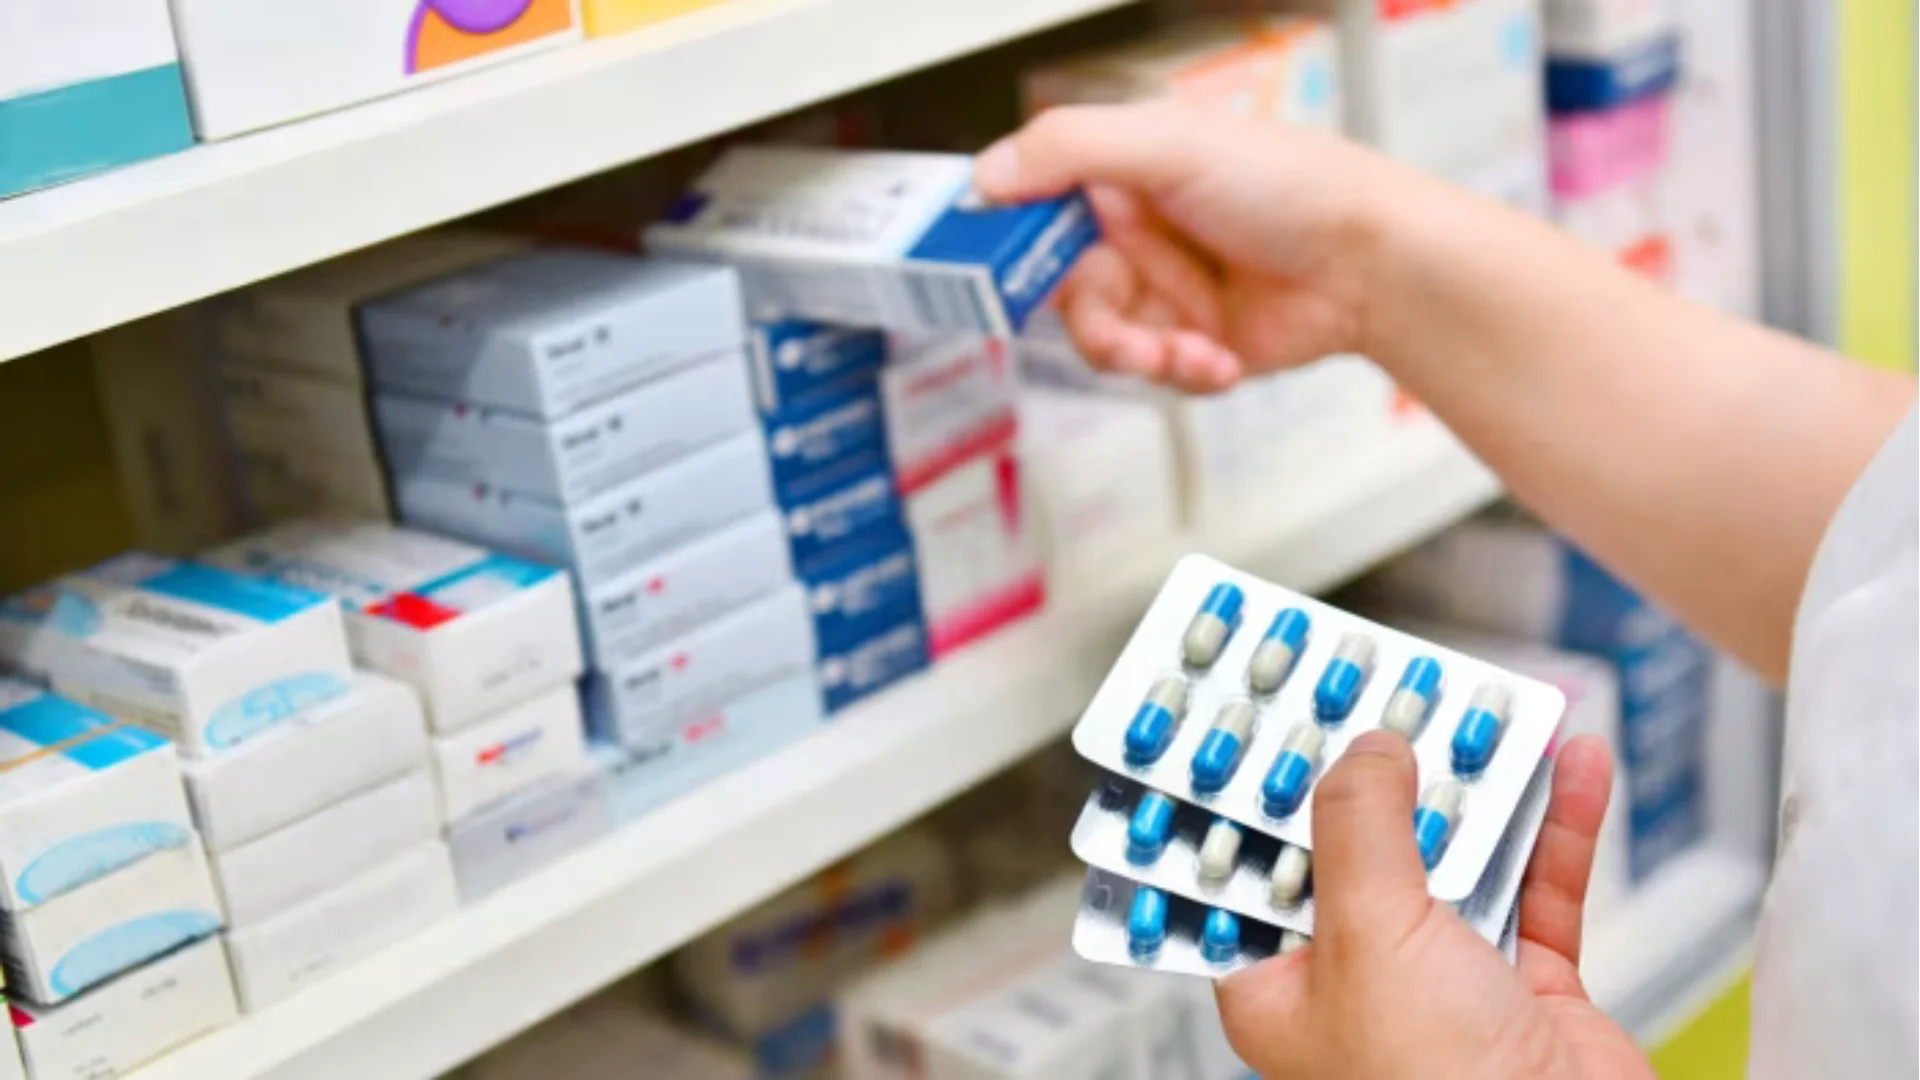 Pricing Practices for Essential Medicines in Yemen